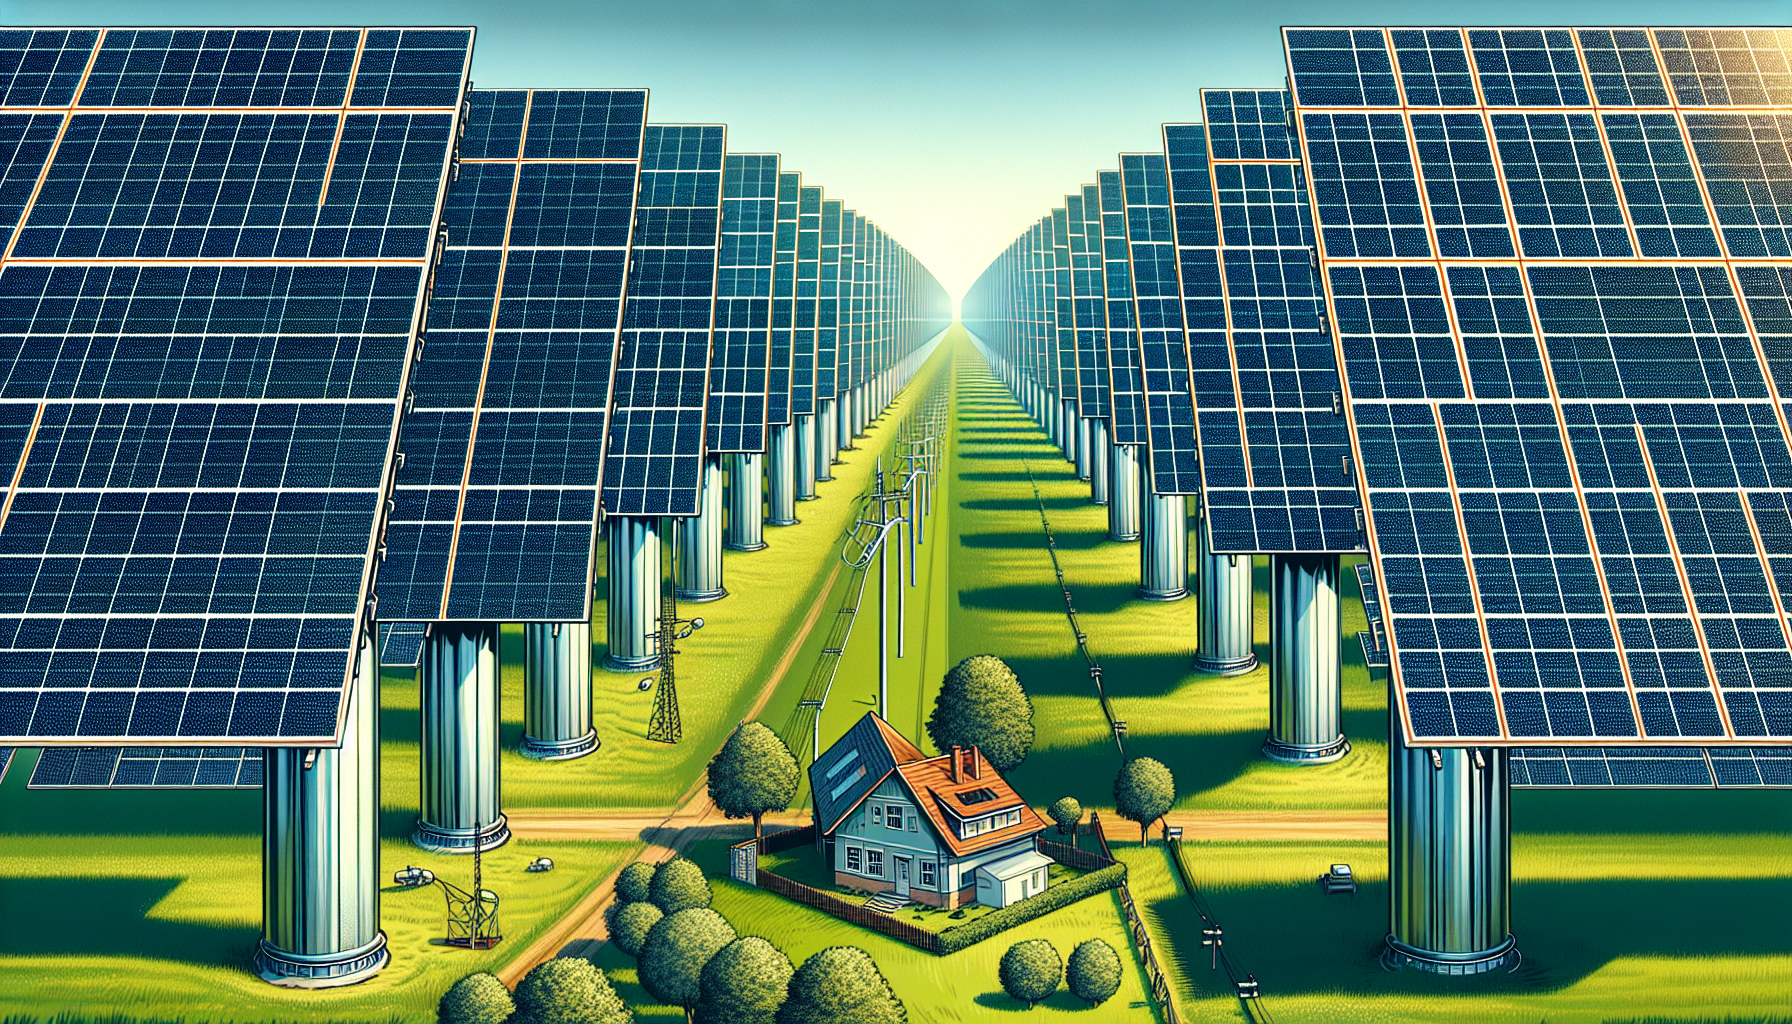 Illustration of large commercial solar panels